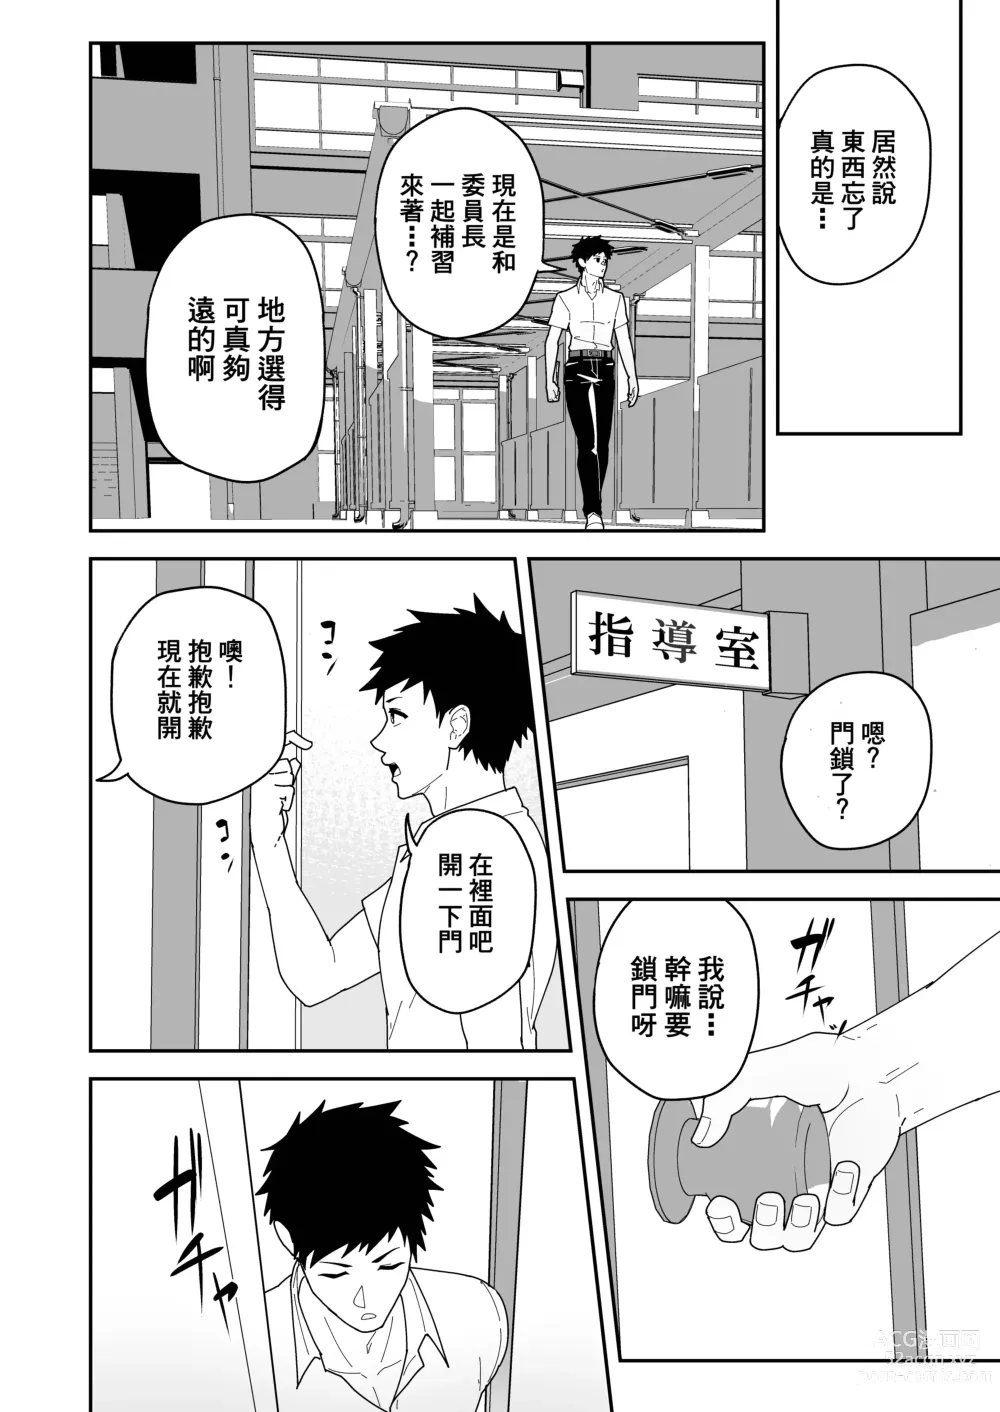 Page 32 of doujinshi 夏日变形记